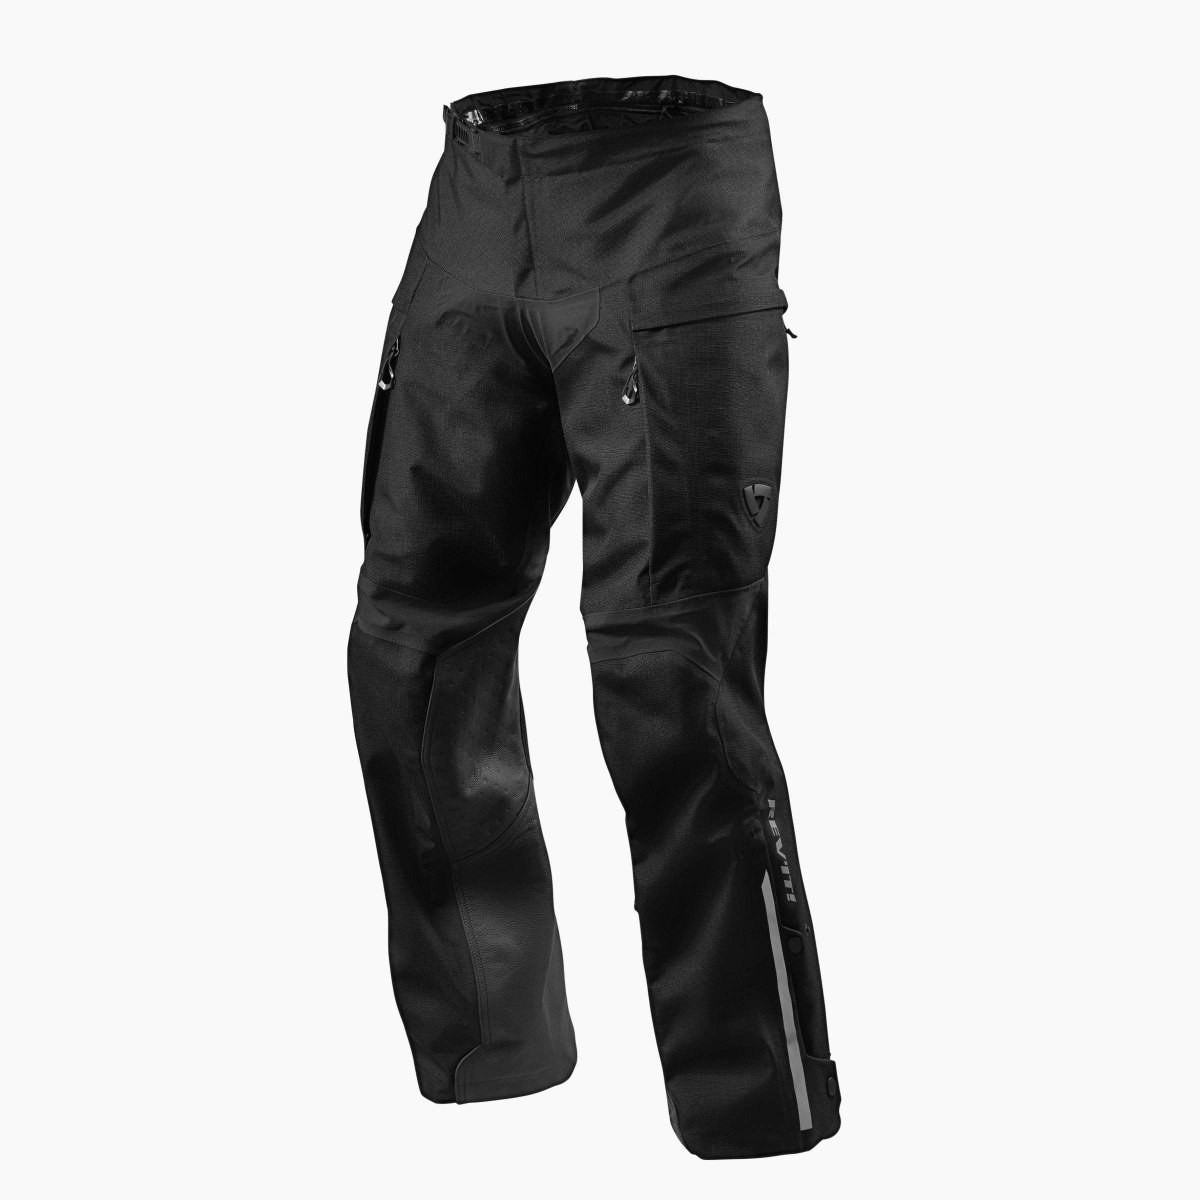 Image of REV'IT! Component H2O Long Black Motorcycle Pants Talla XL